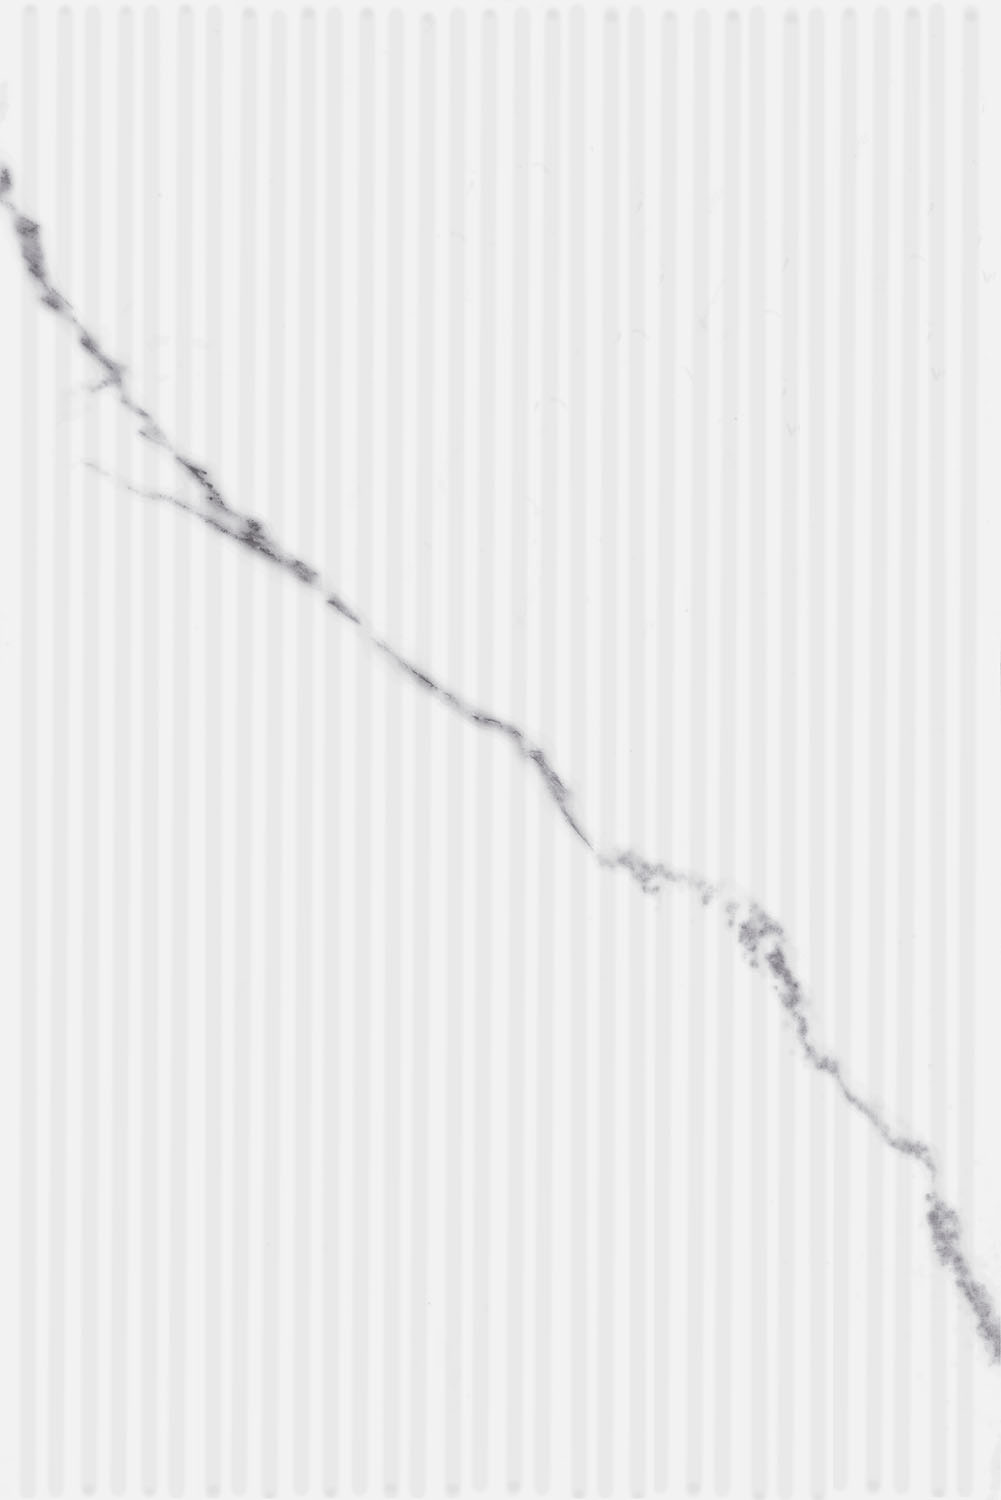 8377 Настенная Мираколи Белый глянцевый структура 20x30x0.86 - фото 9